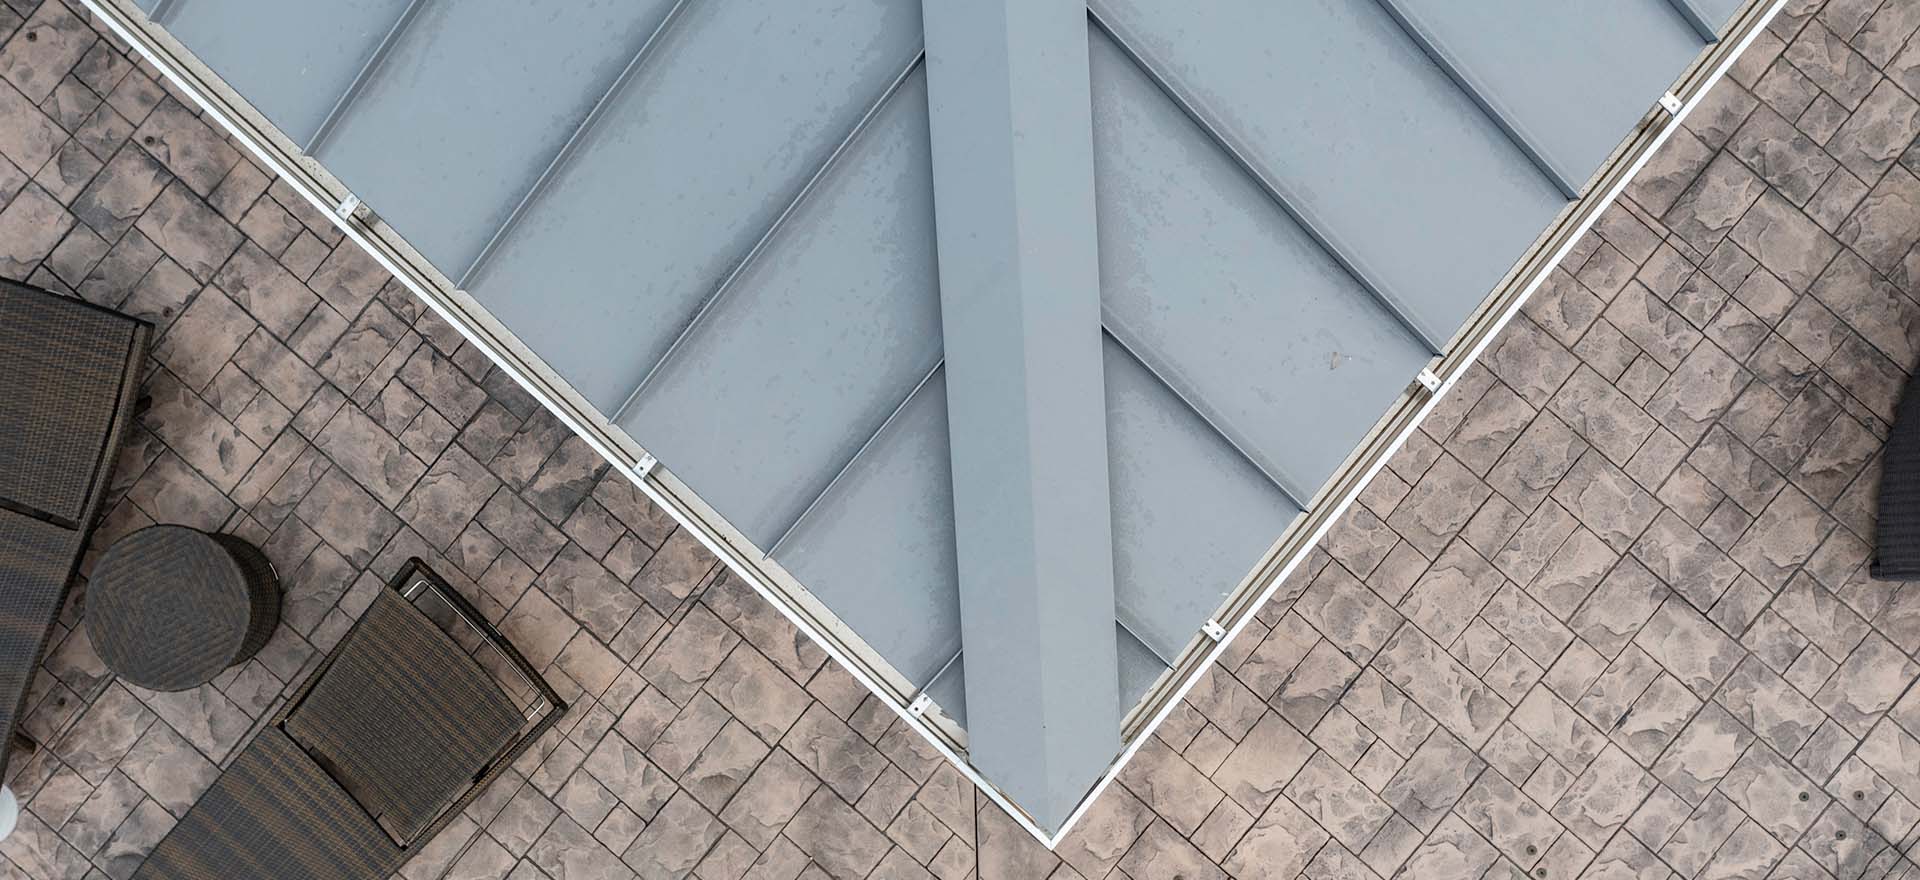 Sentriclad Metal Slate Gray And Andrews Roofings Rapid Rain 56x Gutter